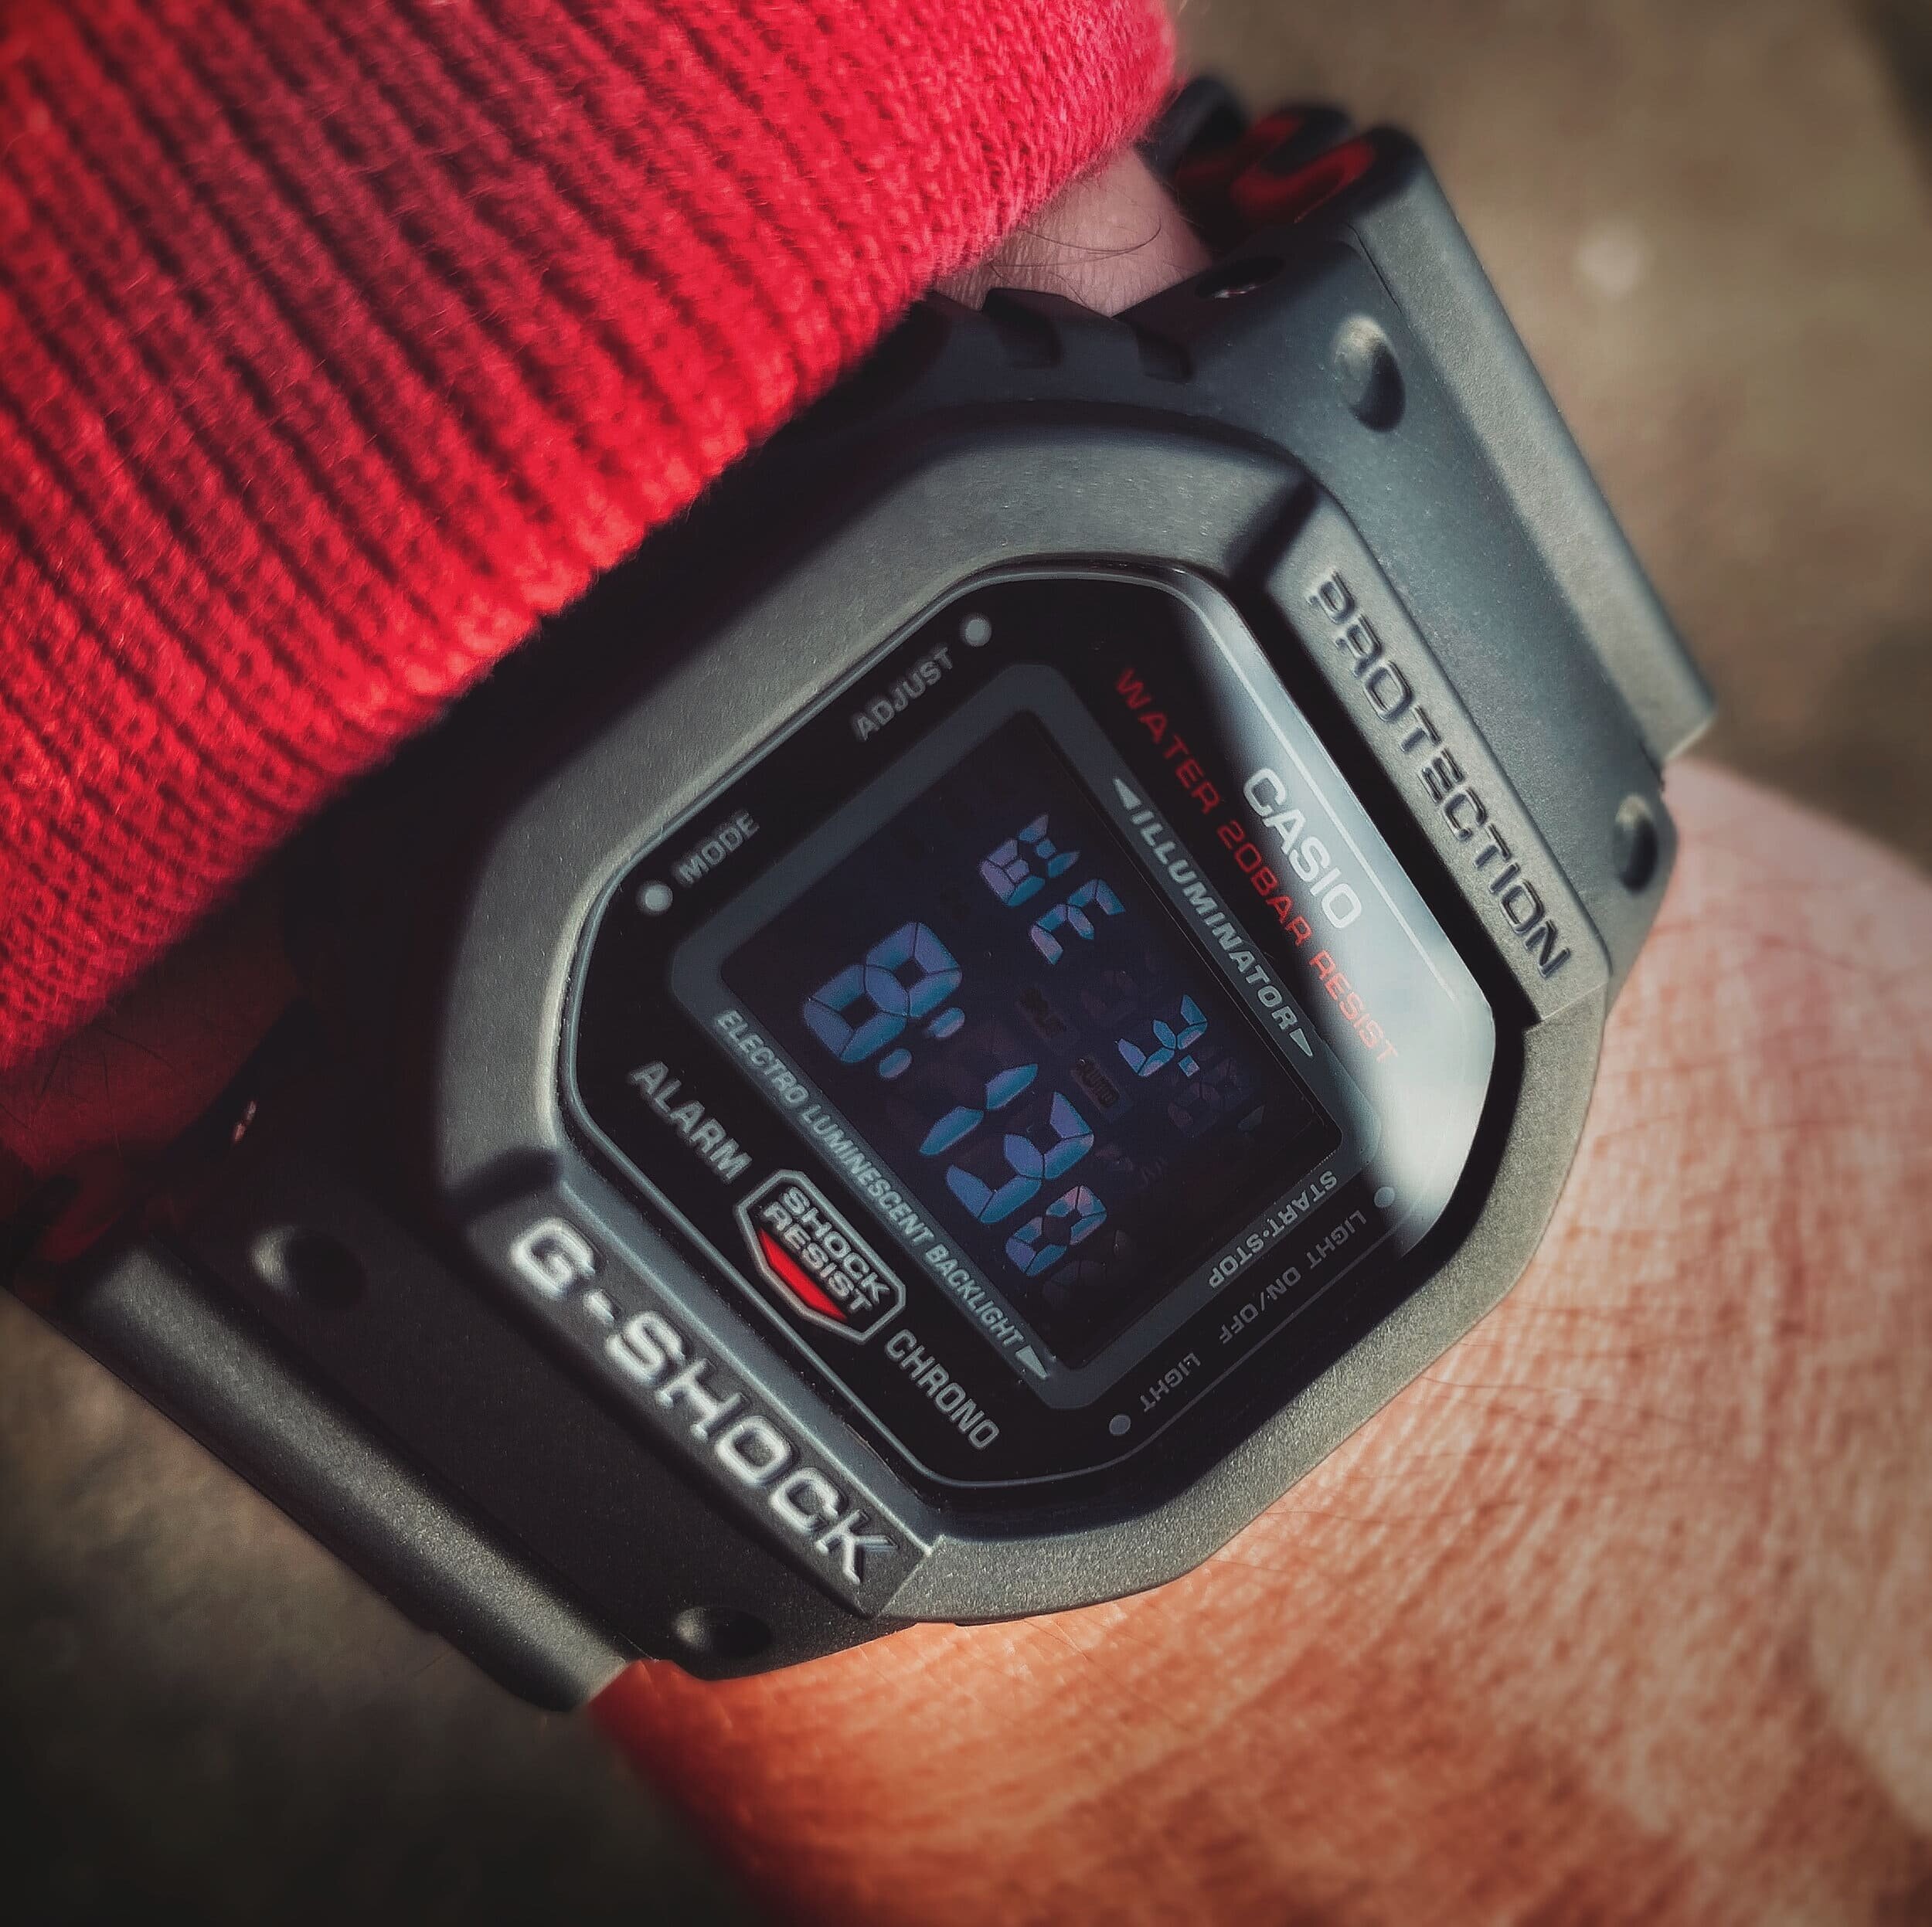 konjugat mave snap CASIO G-SHOCK DW-5600 Series Review — MTR-Watches